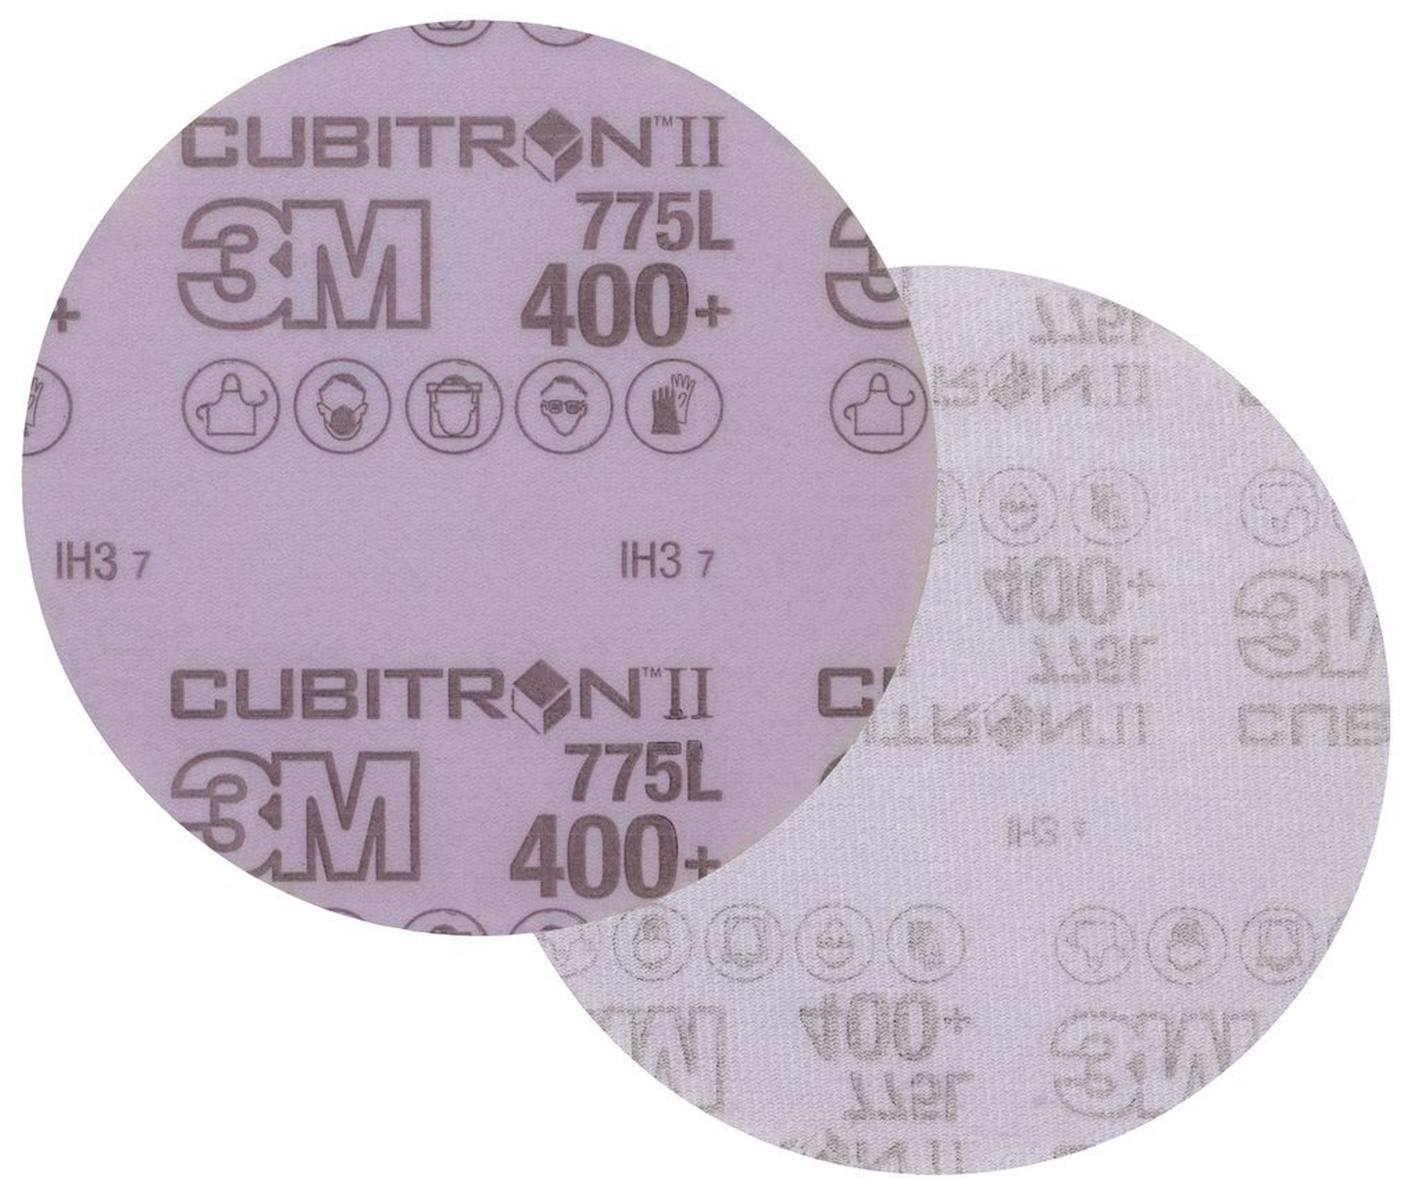 3M Cubitron II Disco de película Hookit 775L, 125 mm, 400+, sin perforar #05055